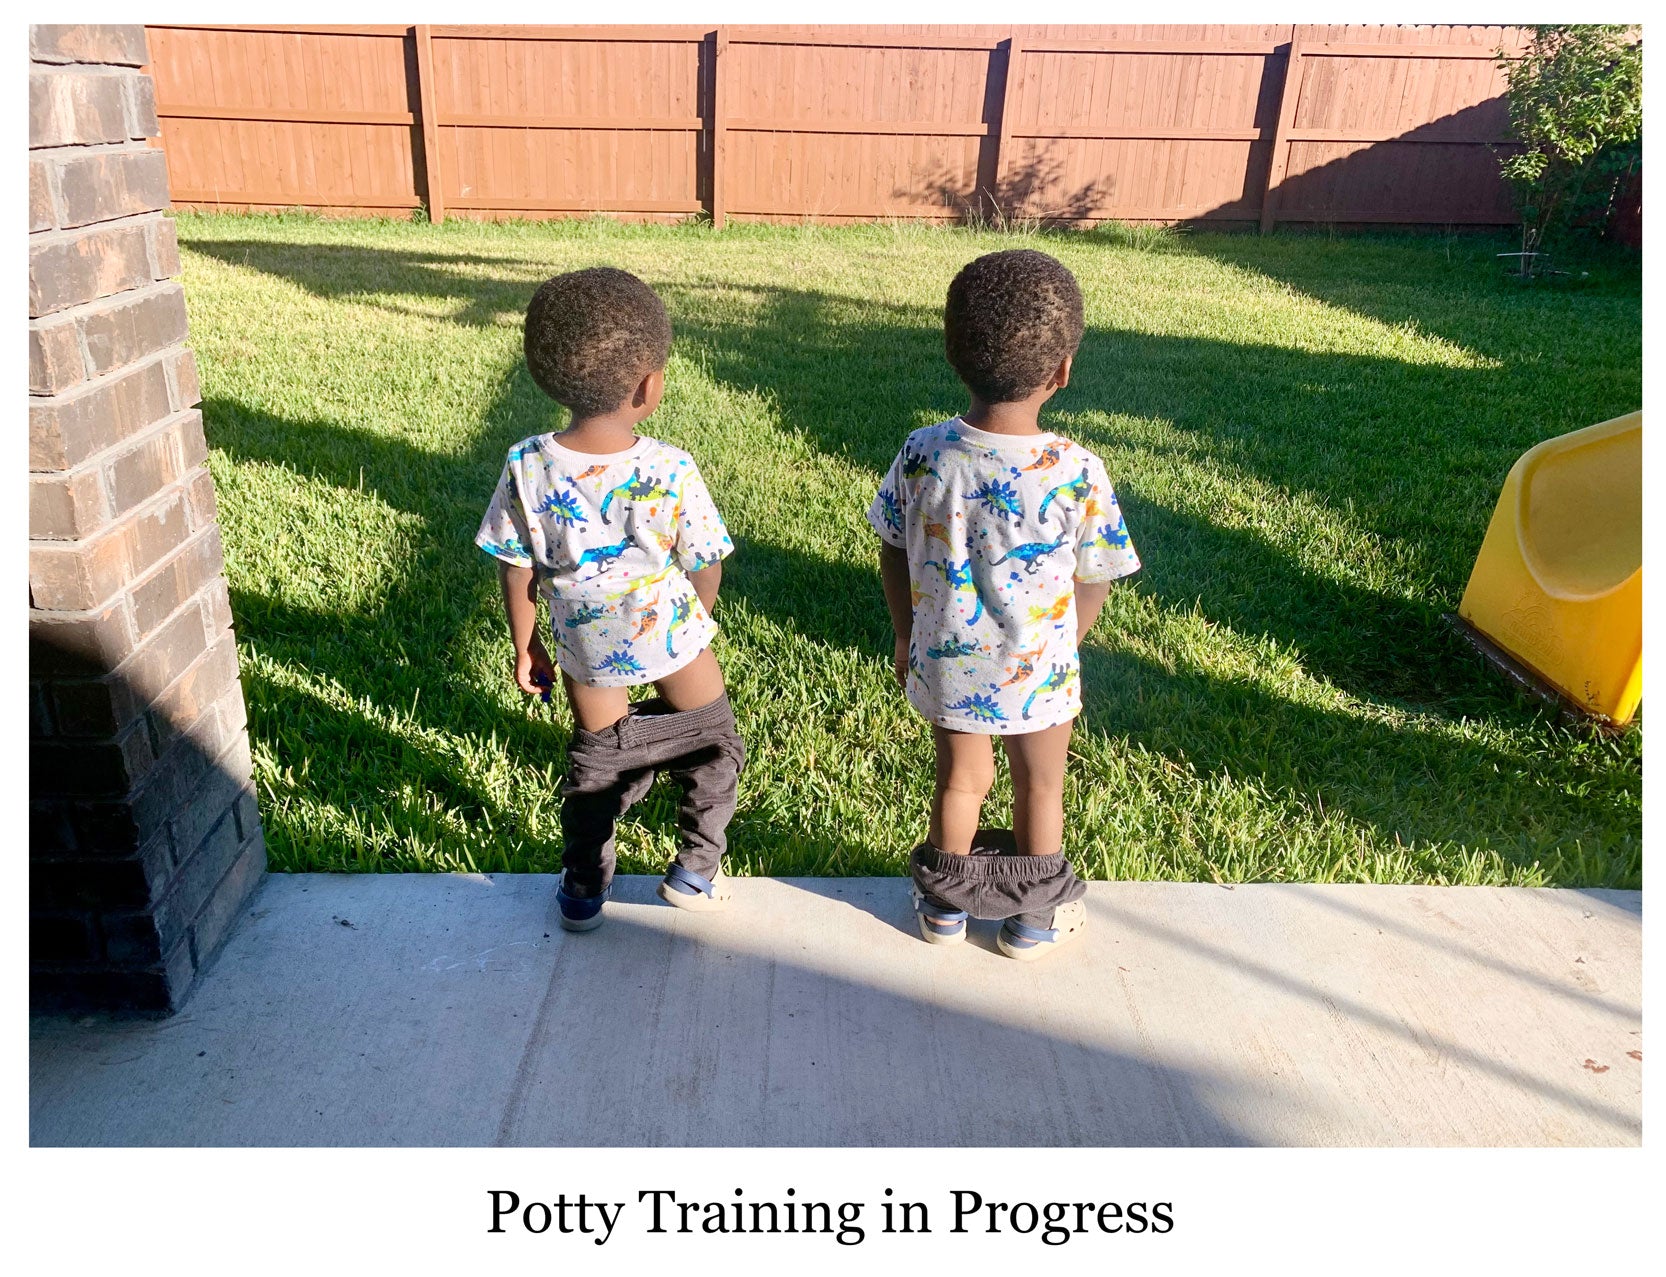 Tips on Potty Training Boys